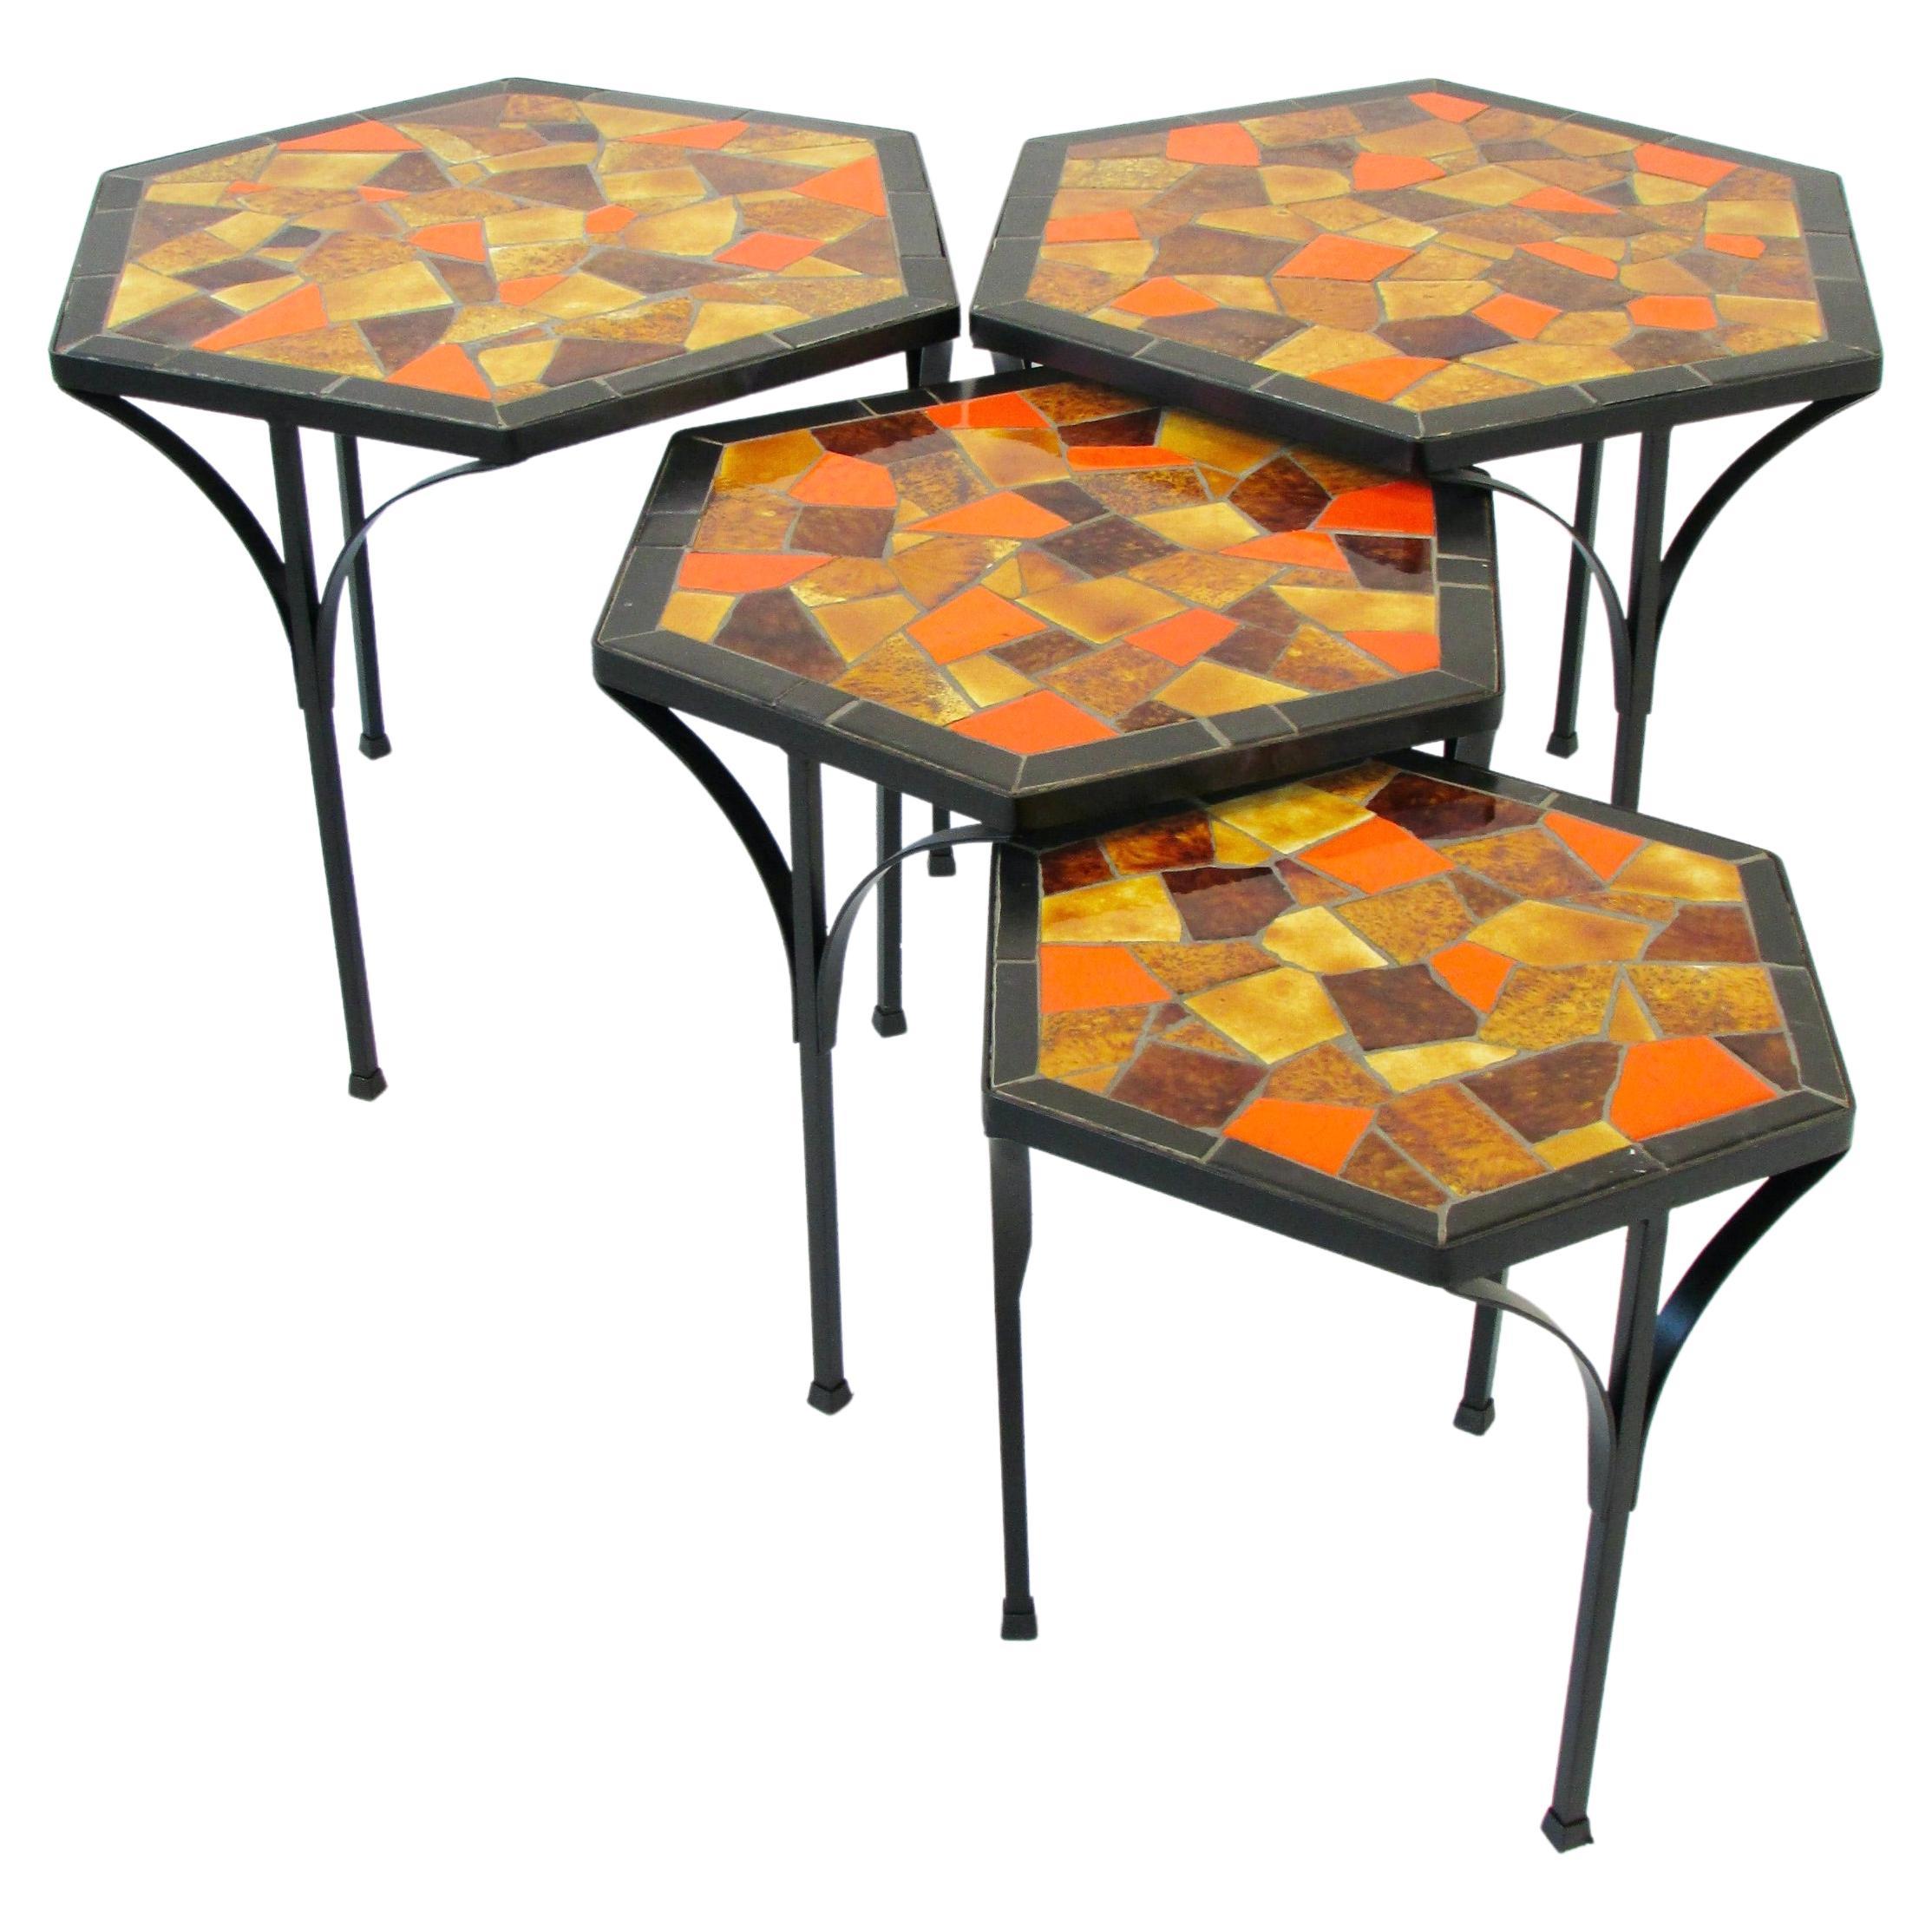 Jon Matin graduated Nest of Hexagonal Tile top Tables on Iron Base   For Sale